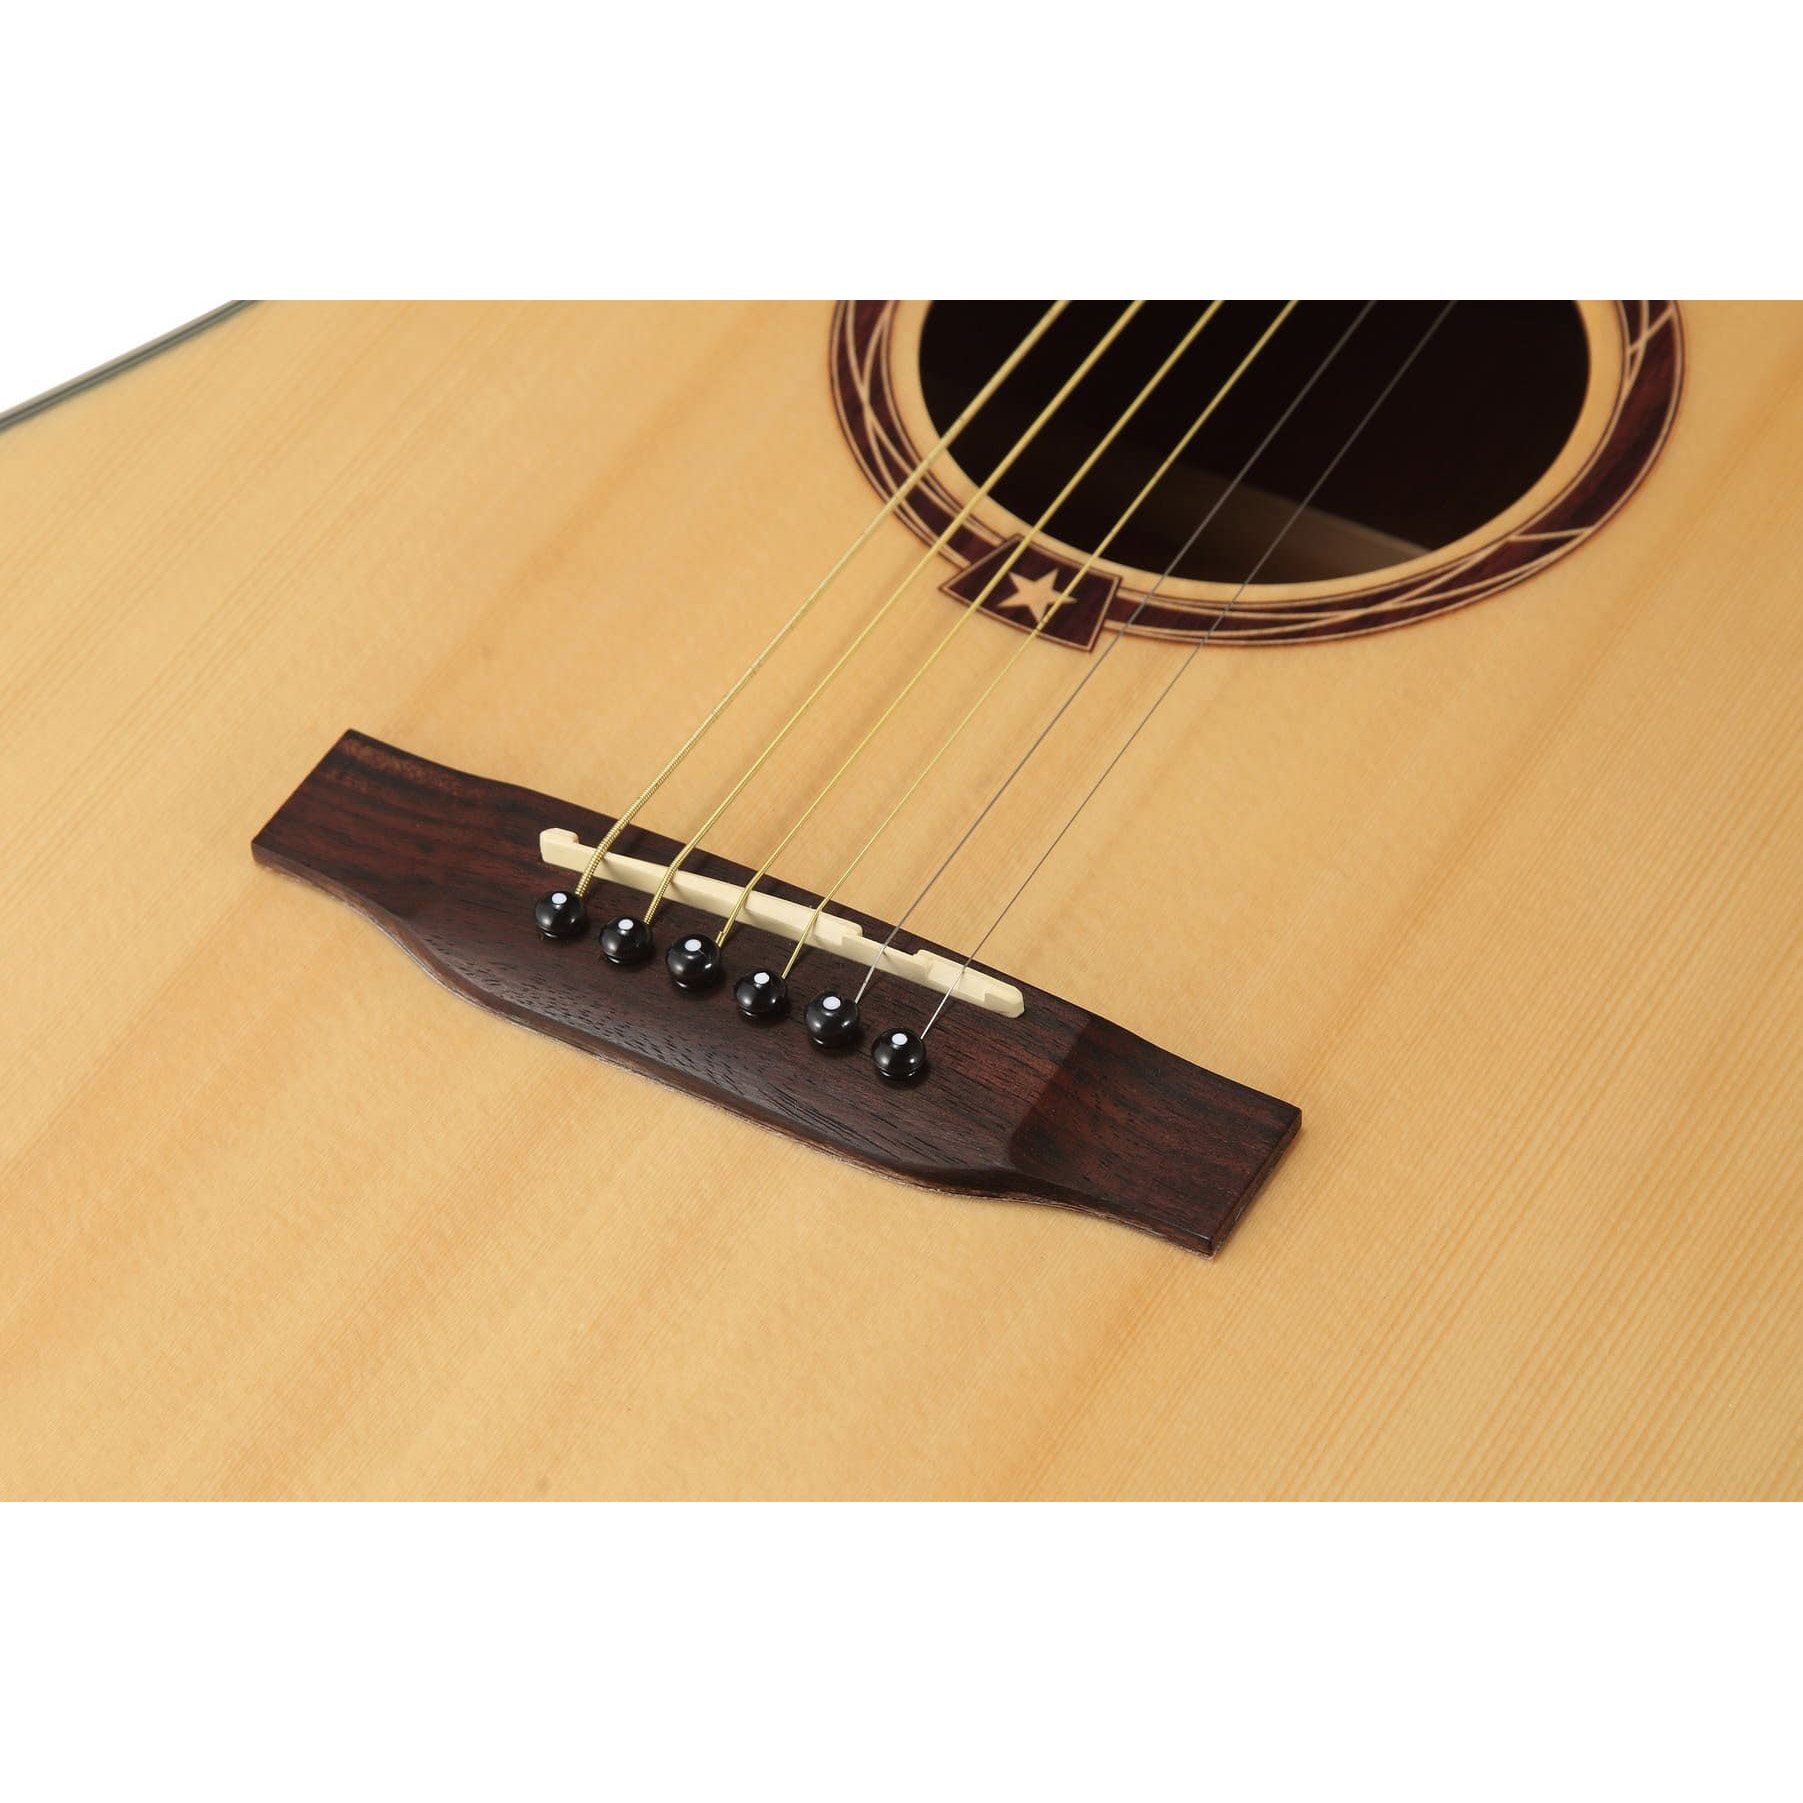 Starsun DG220c-p Open-Pore Акустические гитары